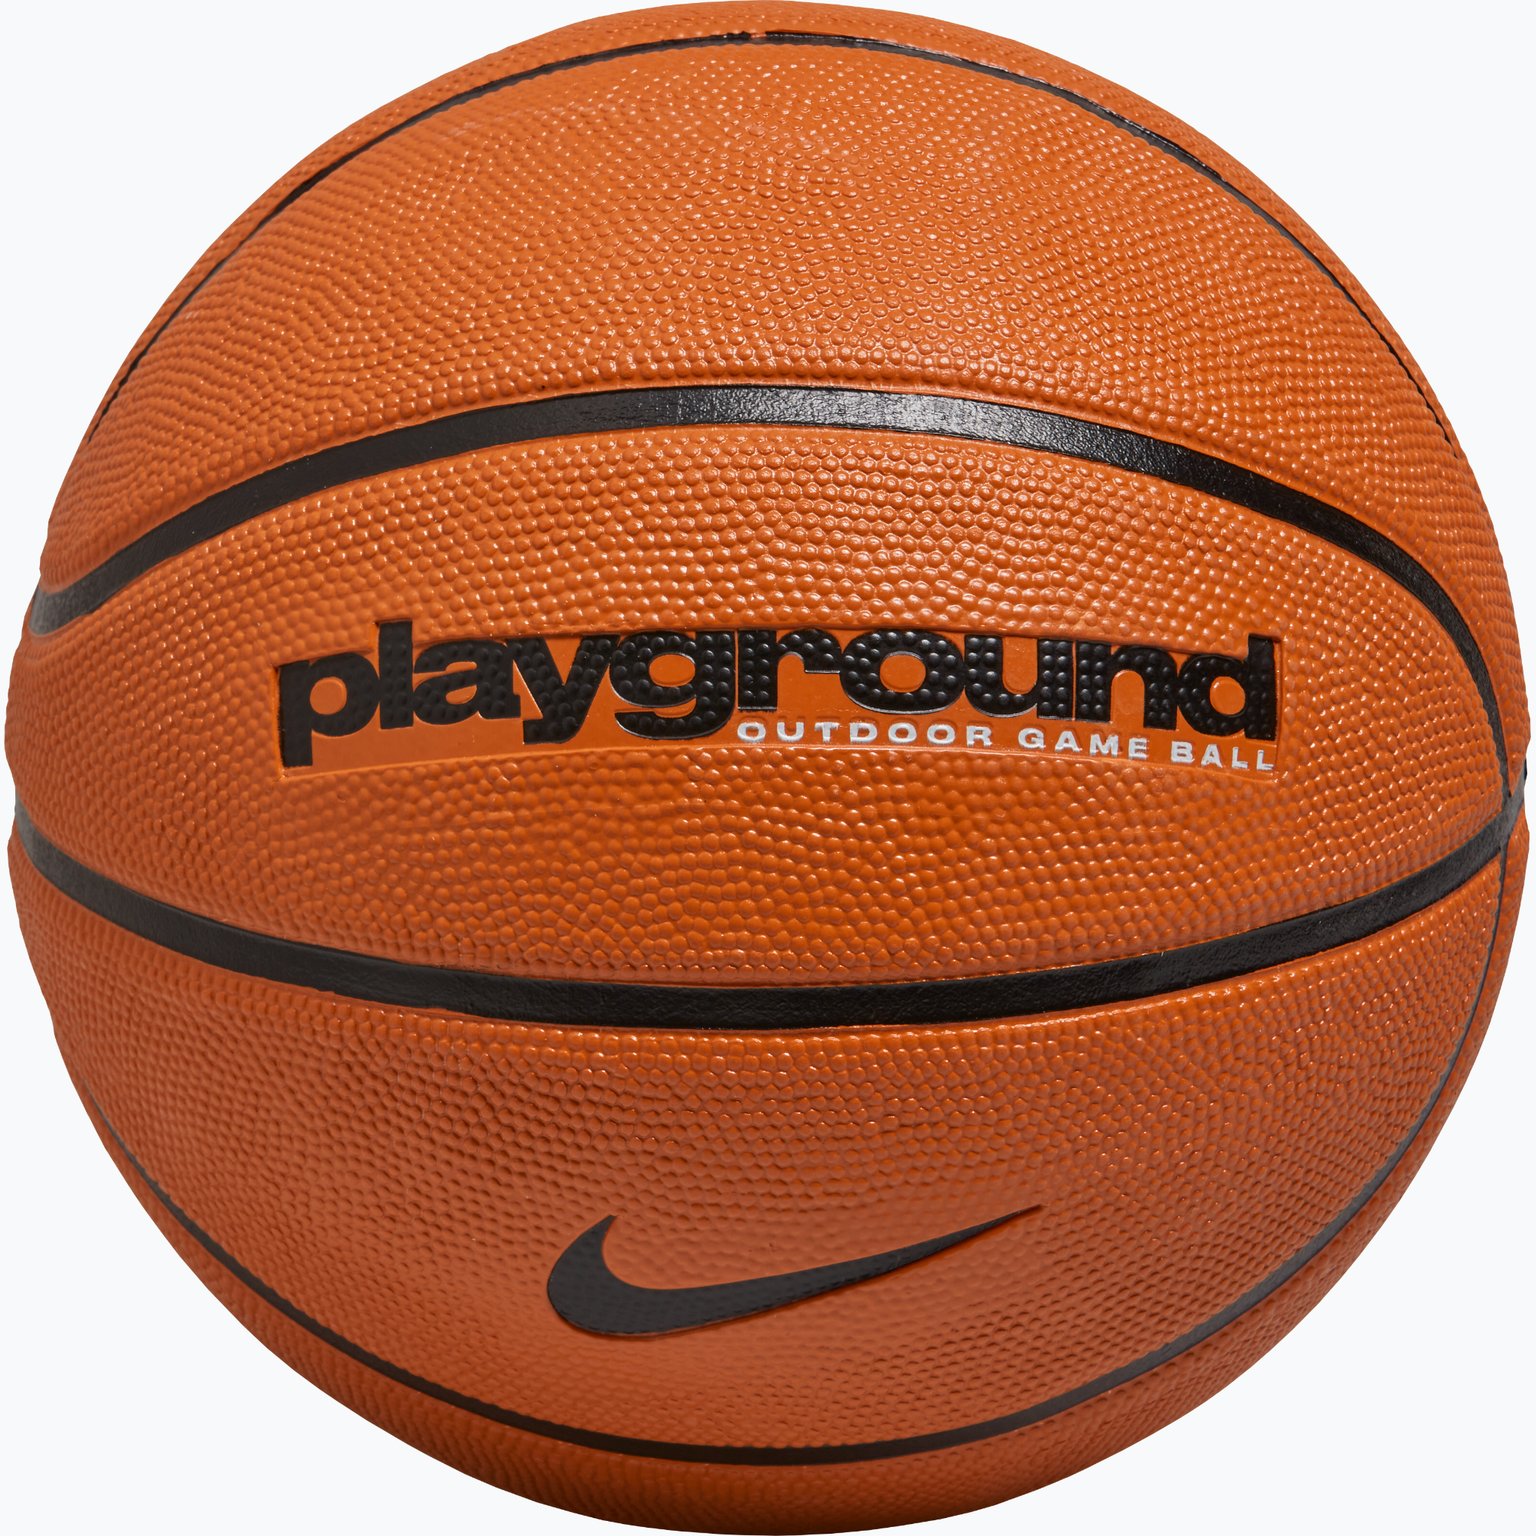 Everyday Playground 8P Deflated basketboll